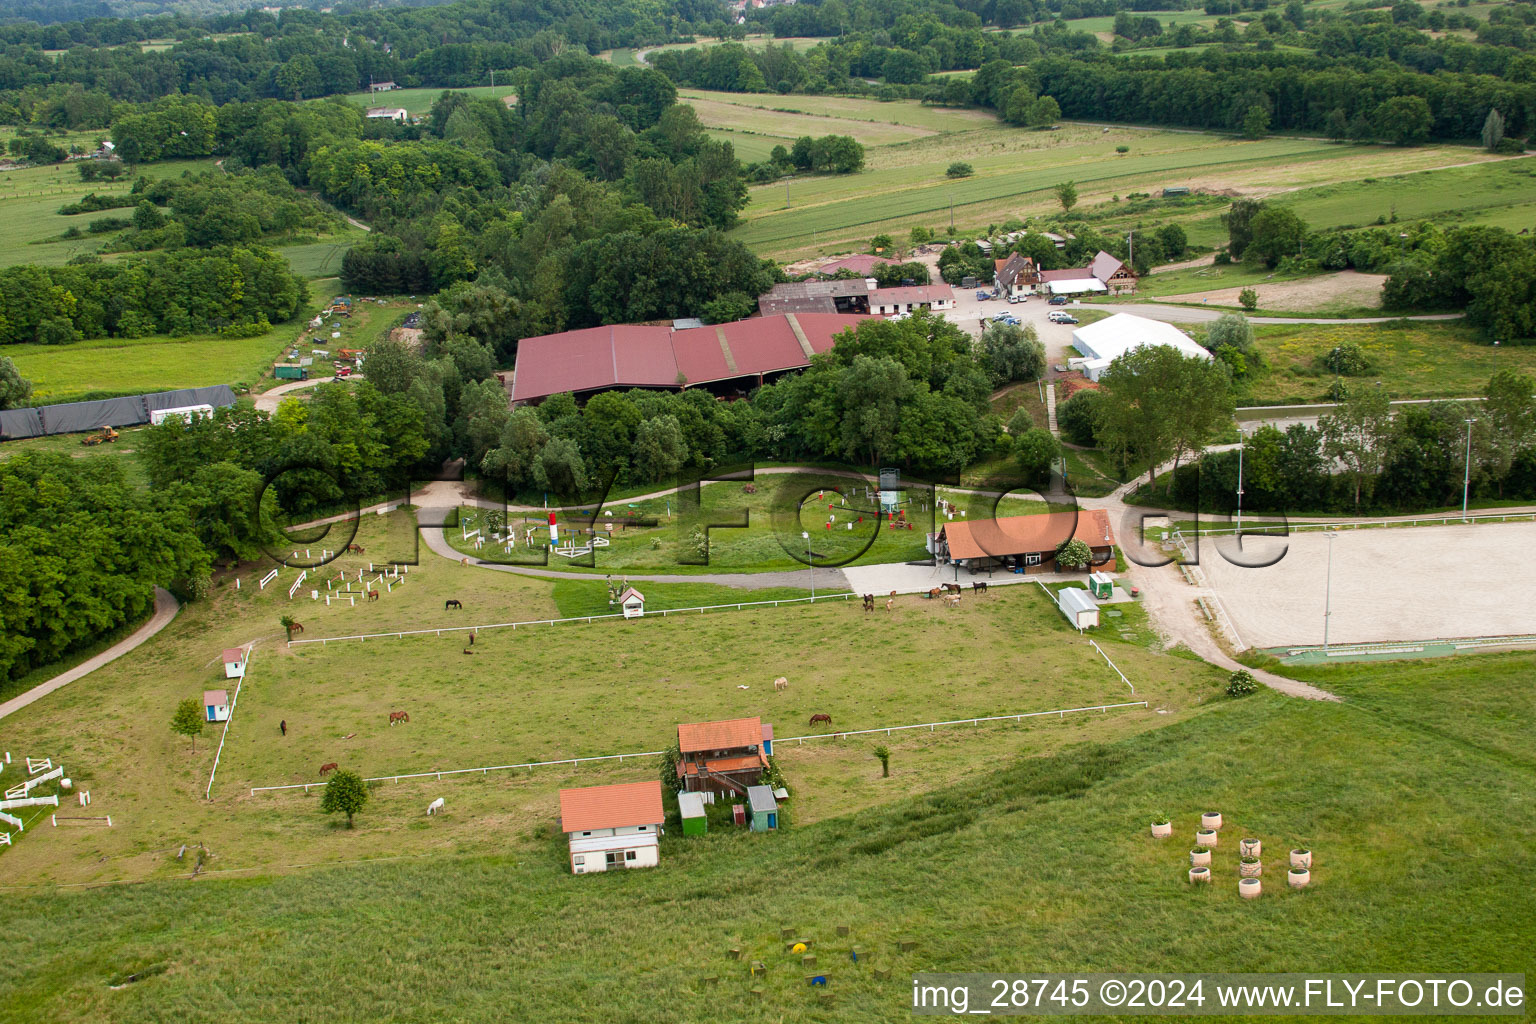 Luftbild von Haras de la Née in Neewiller-près-Lauterbourg im Bundesland Bas-Rhin, Frankreich